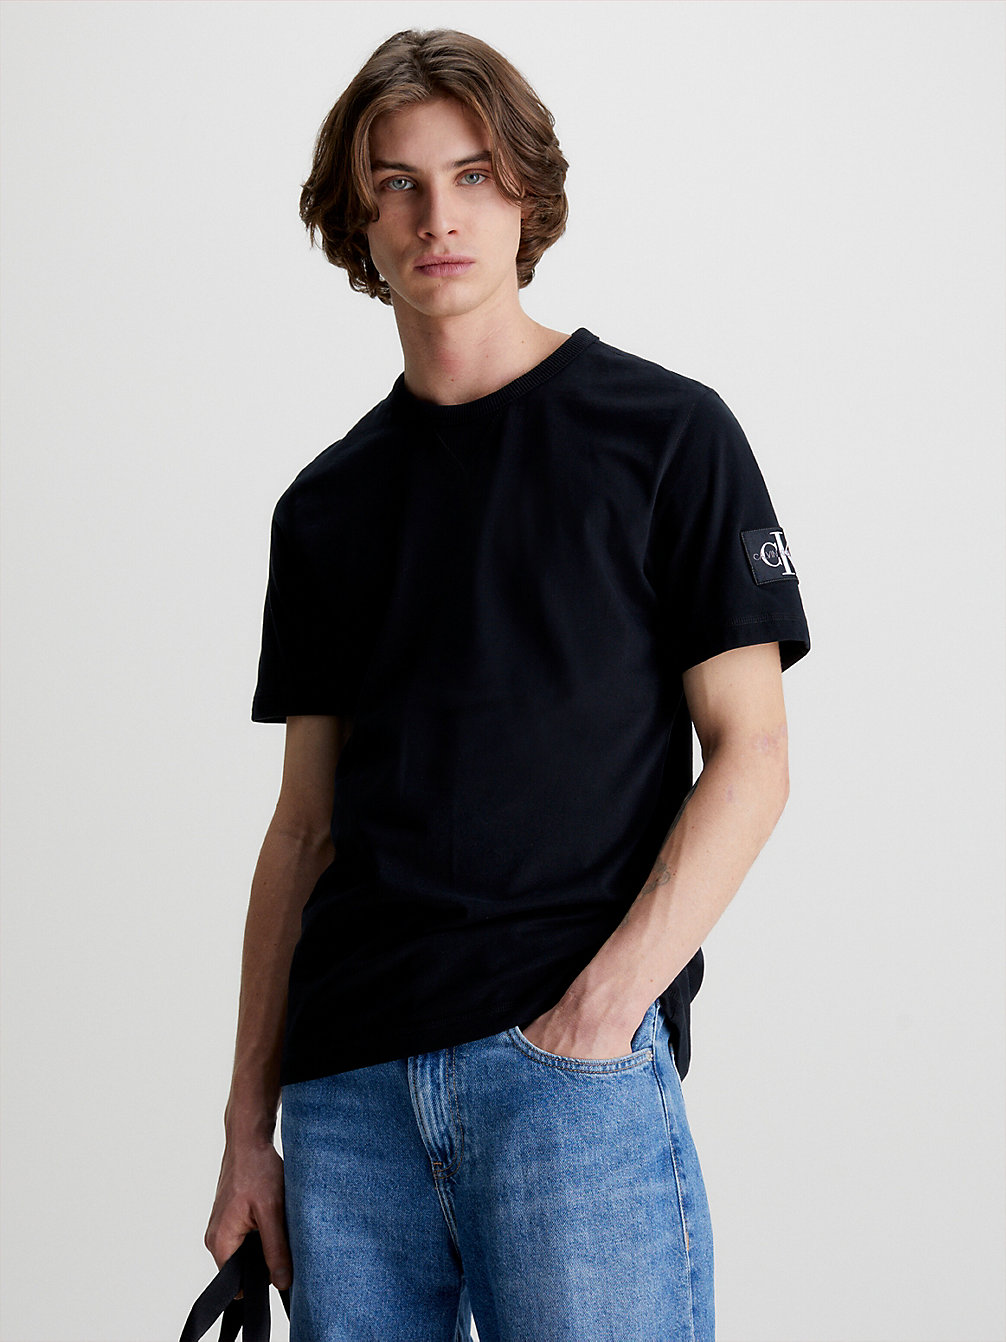 Men's T-shirts Black, & More | Klein®